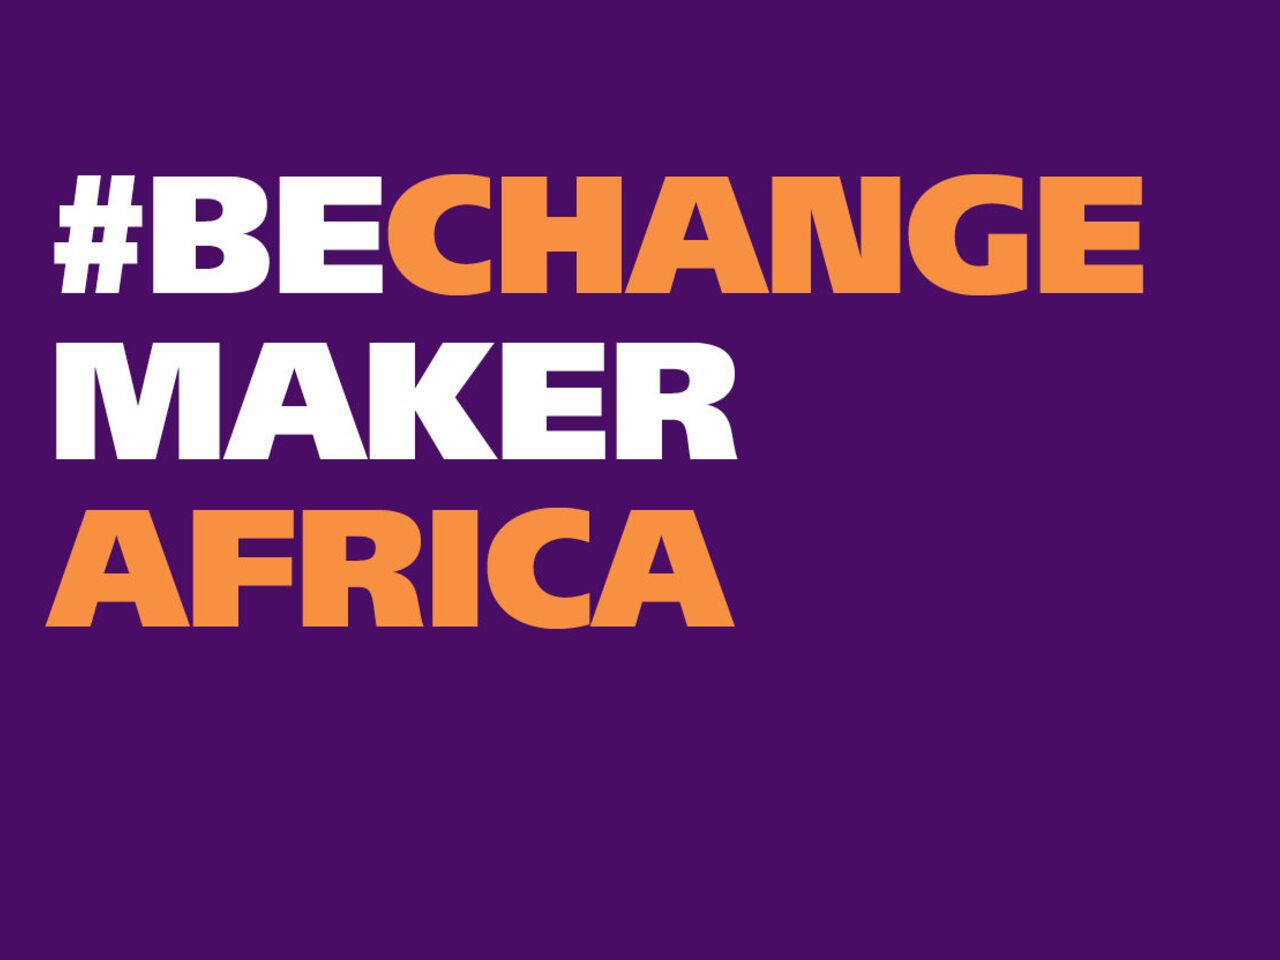 African Union hosts BeChangeMaker Africa information session on 15 July